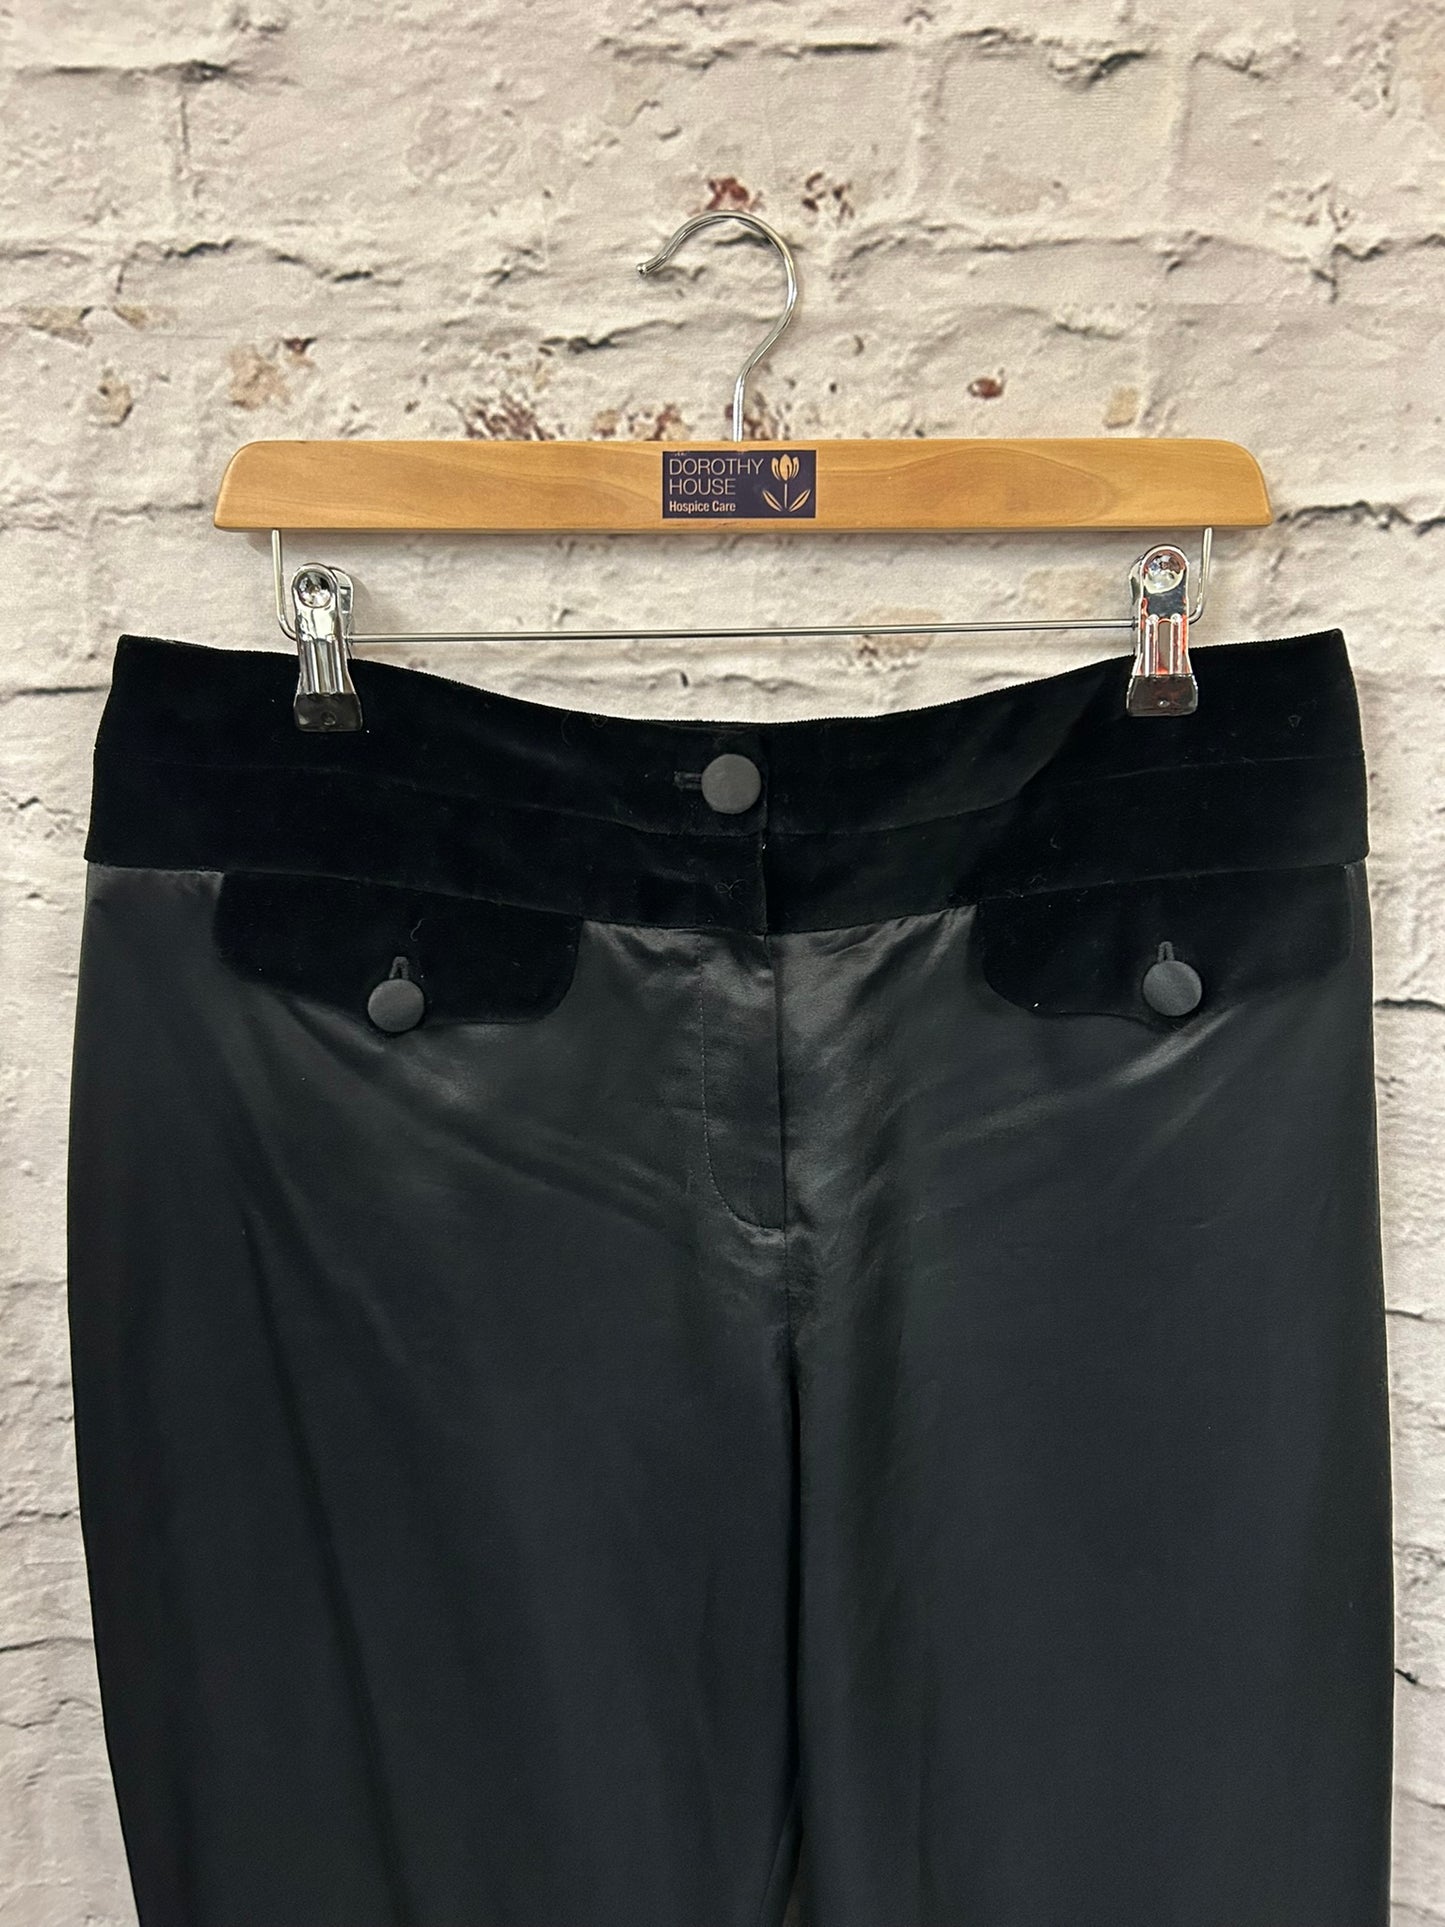 1990s Style Black Velvet Silky Tux Trousers Size 14